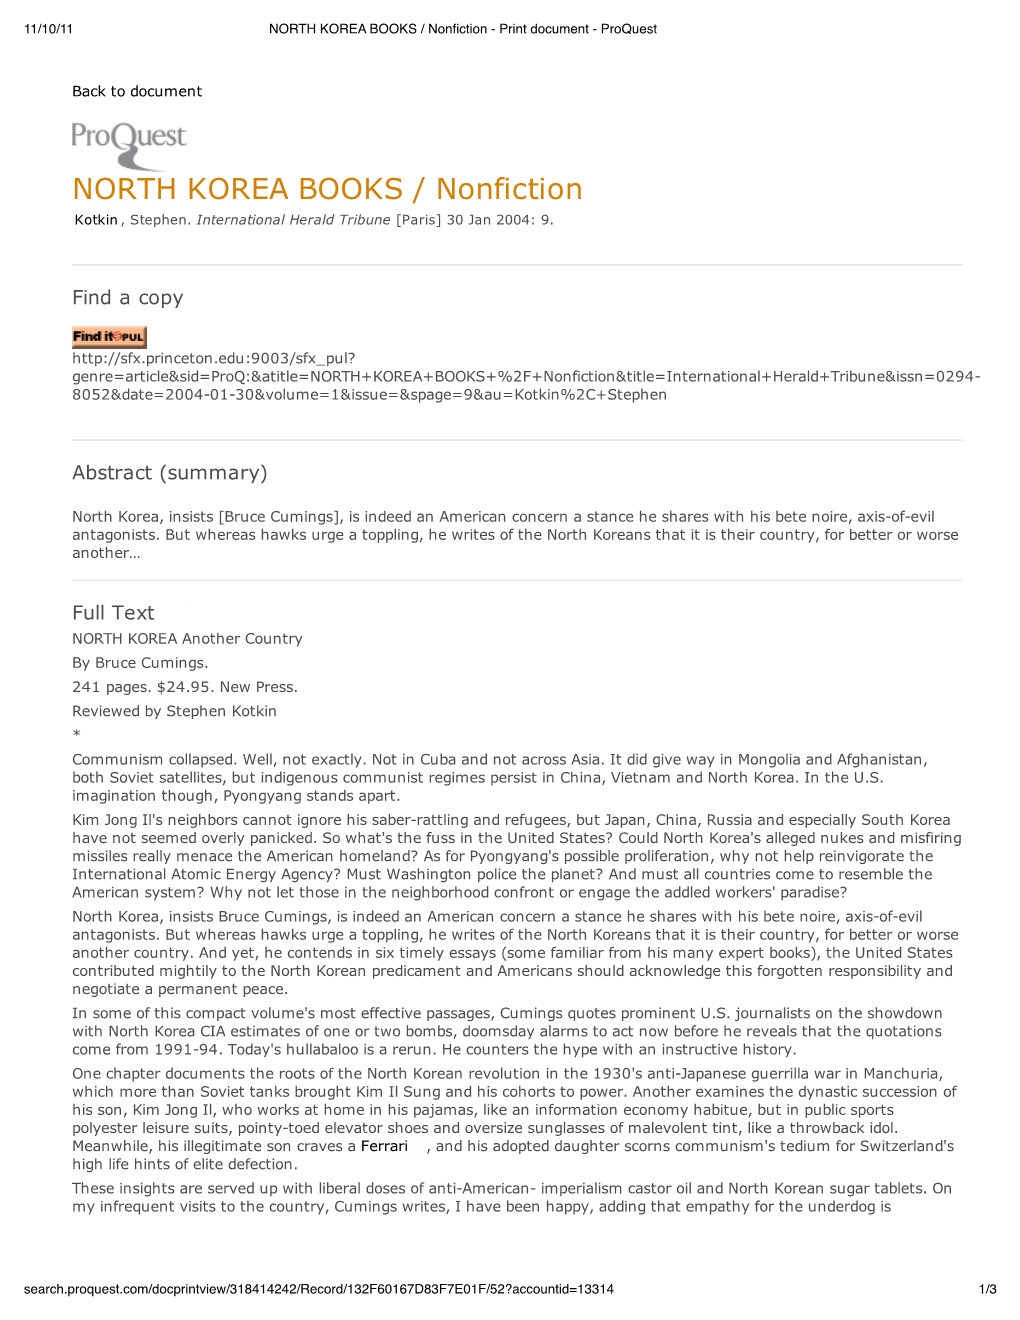 NORTH KOREA BOOKS / Nonfiction Kotkin , Stephen